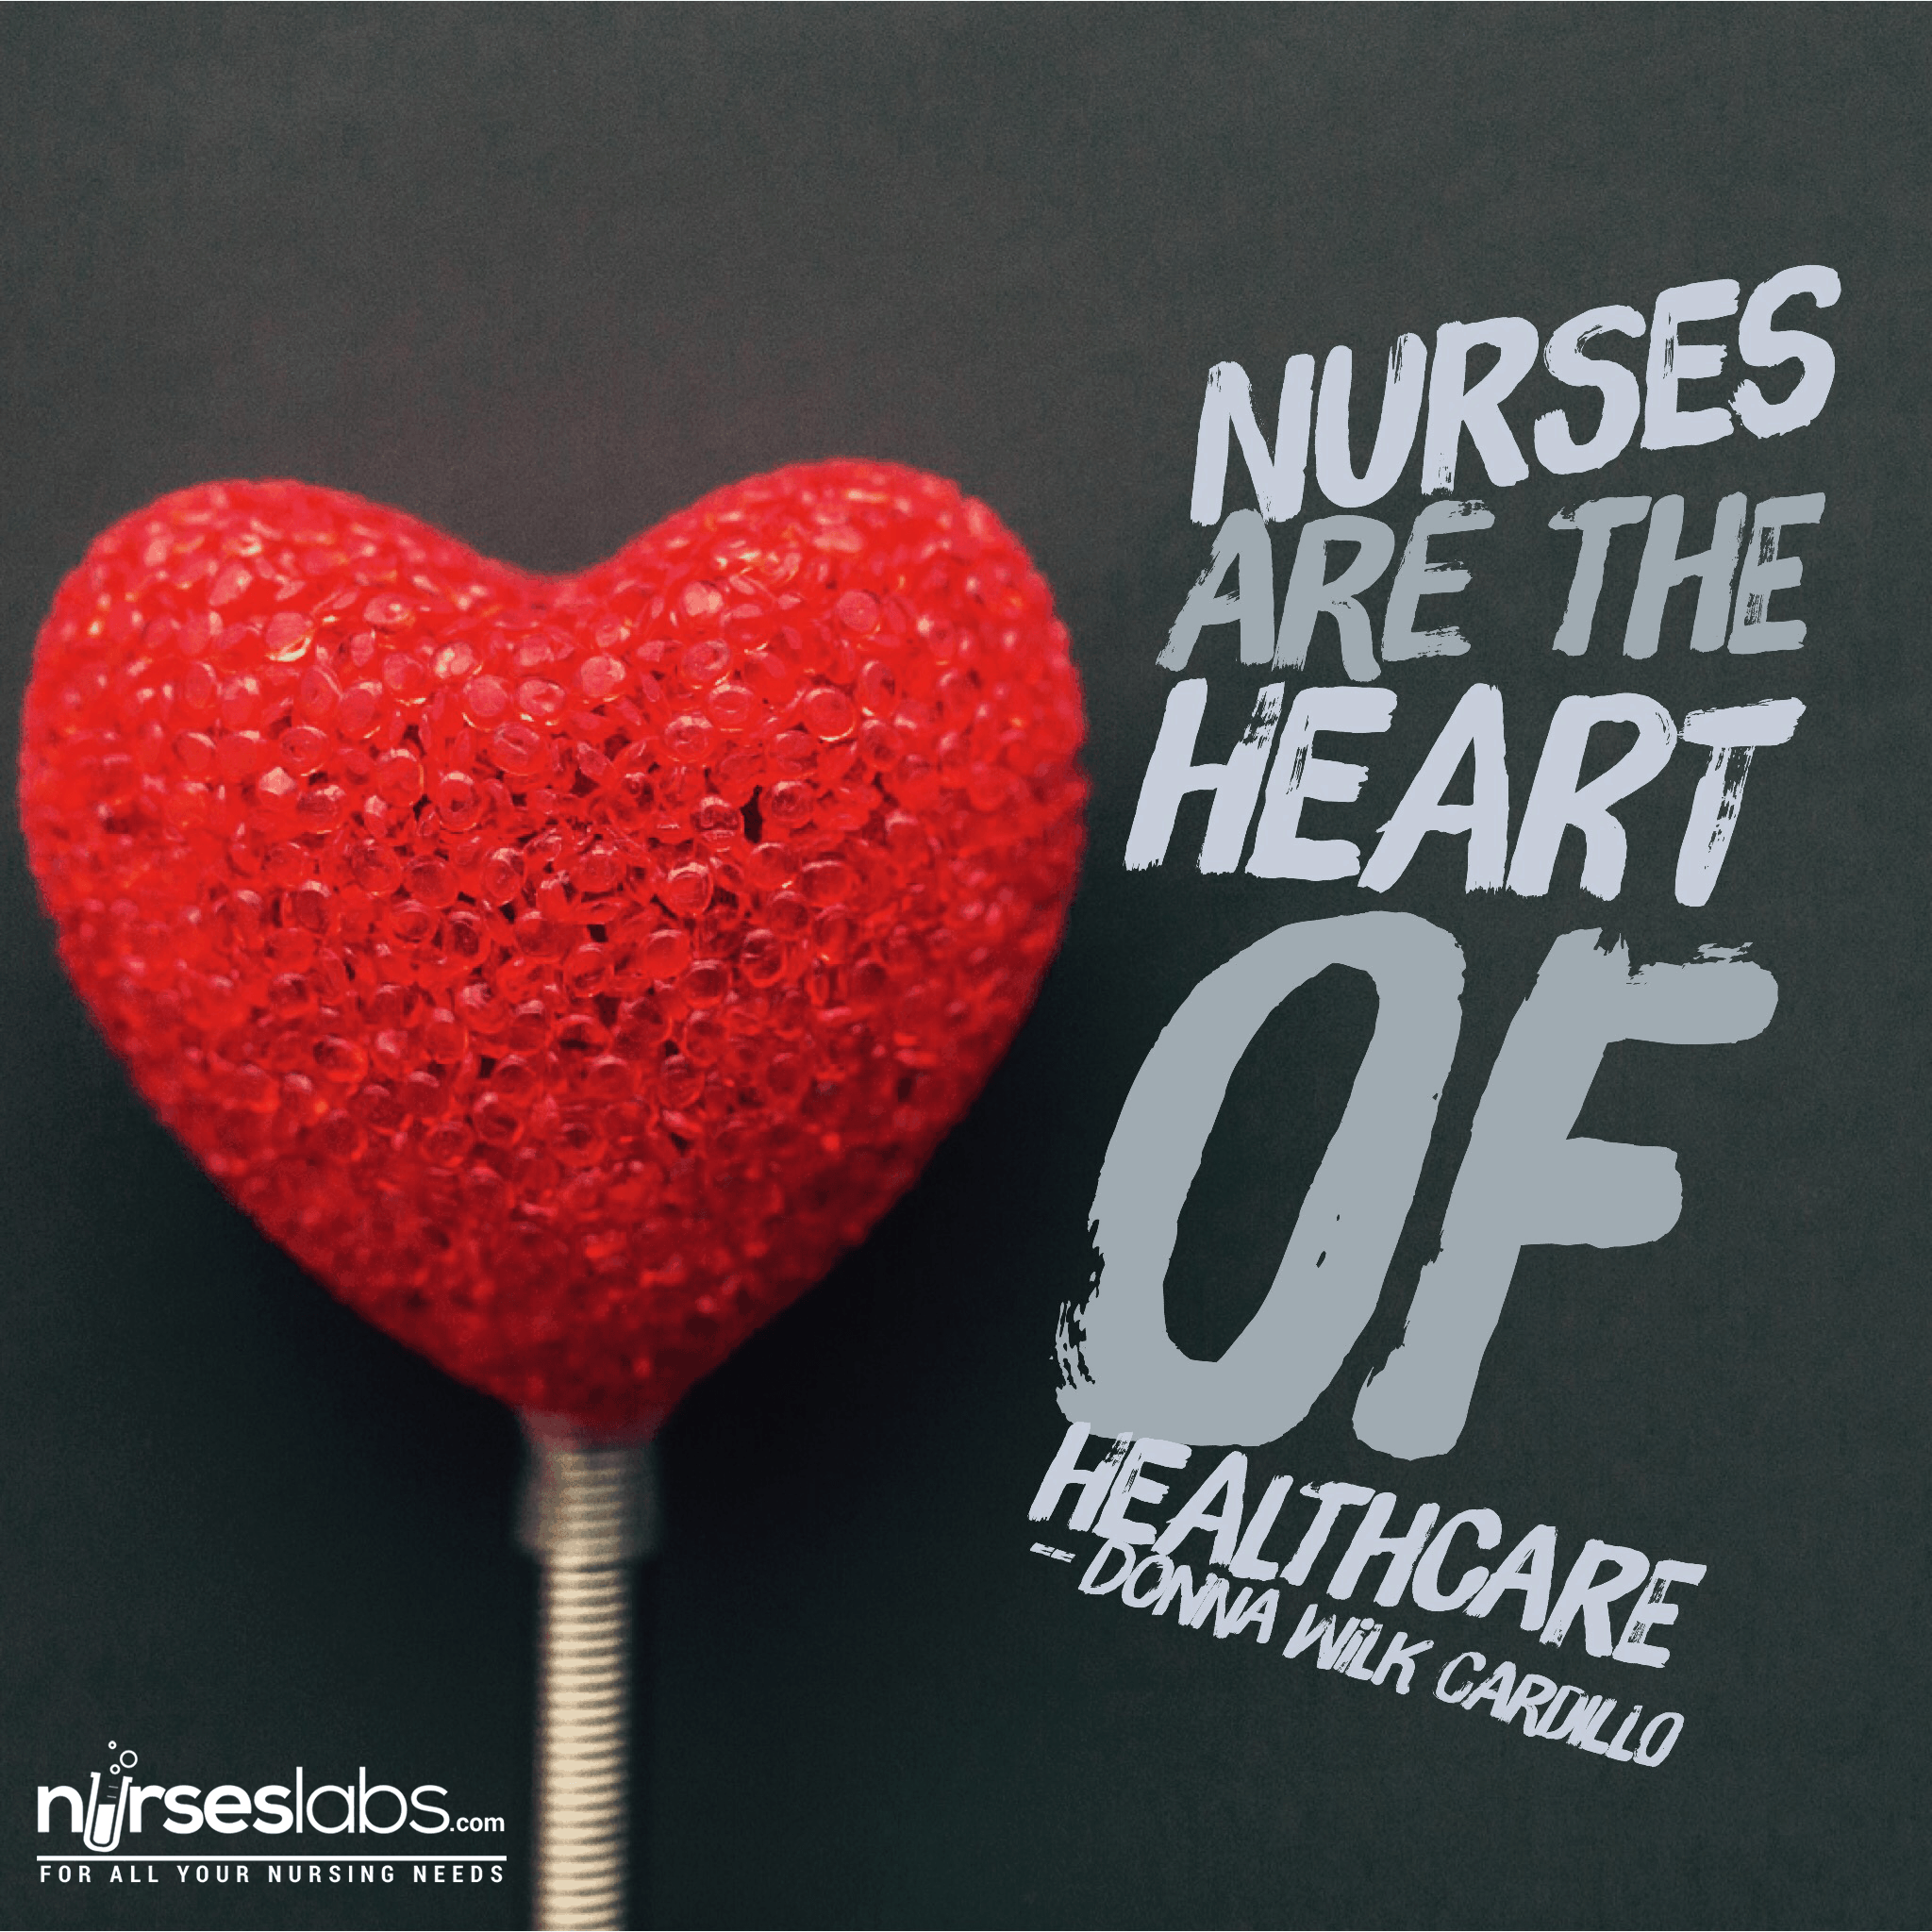 Nurses are the heart of healthcare.